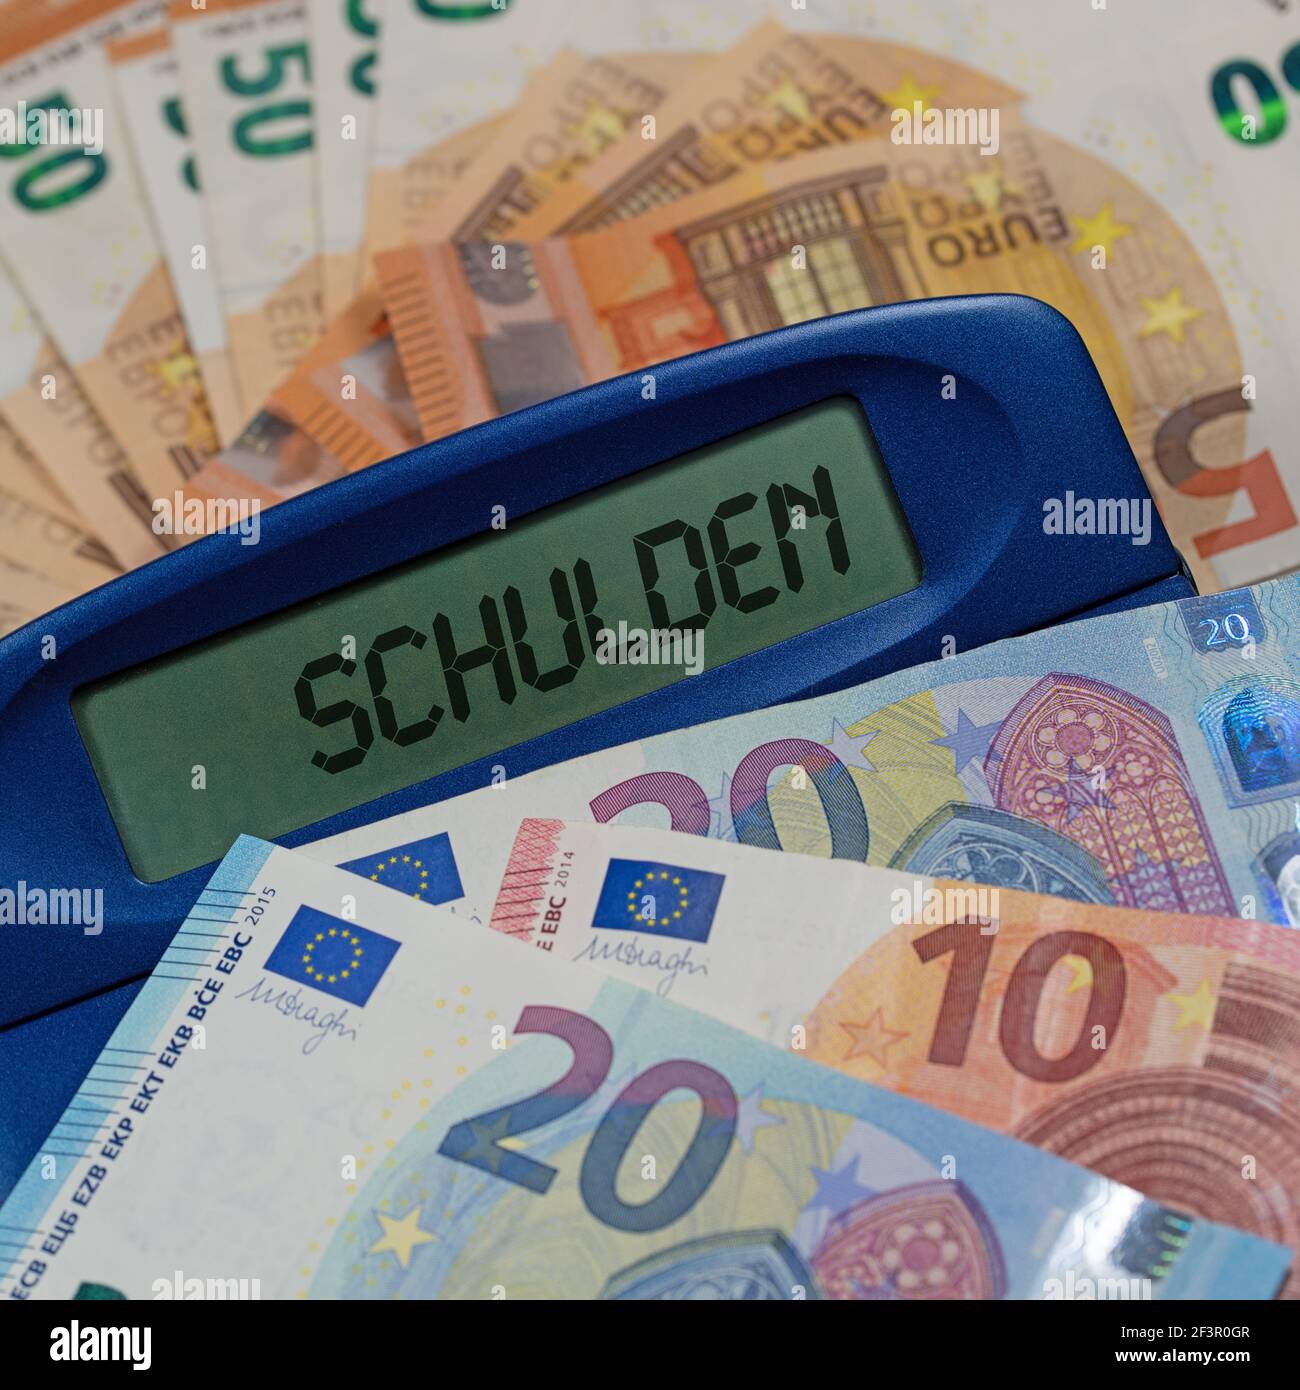 Pocket calculator with the text 'Schulden' on money bills, translation 'Debt' Stock Photo